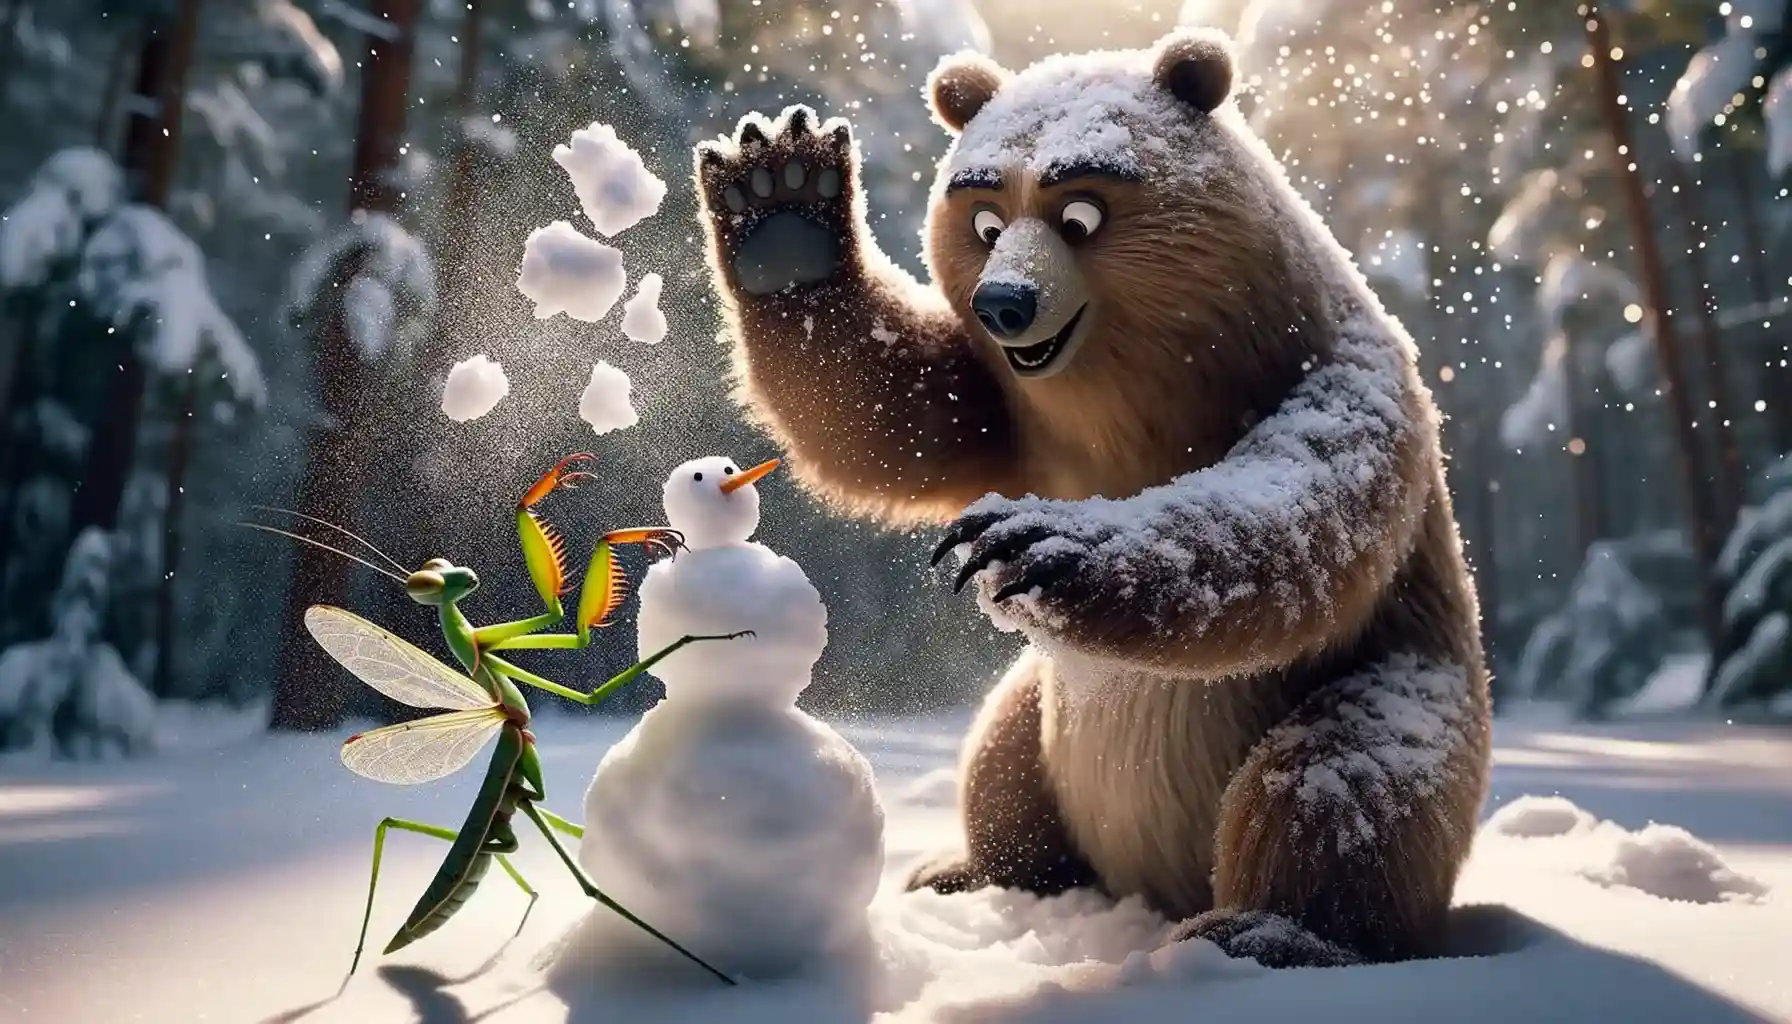 Bruno the bear playfully tosses a handful of snow at Maya the praying mantis